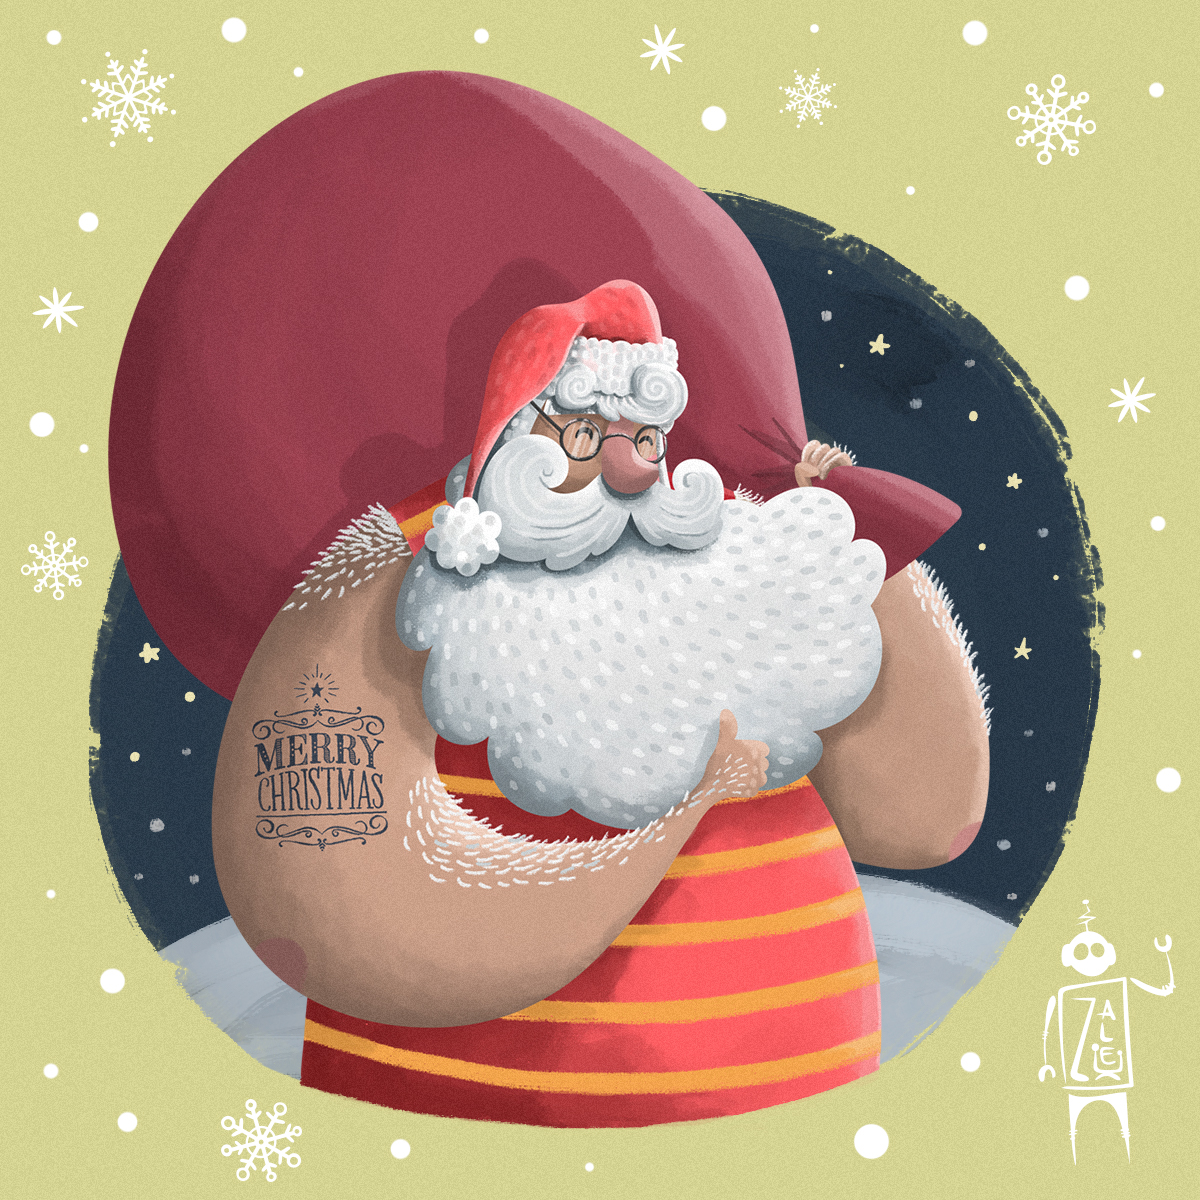 Santa Claus Christmas holidays winter cartoon new year funny